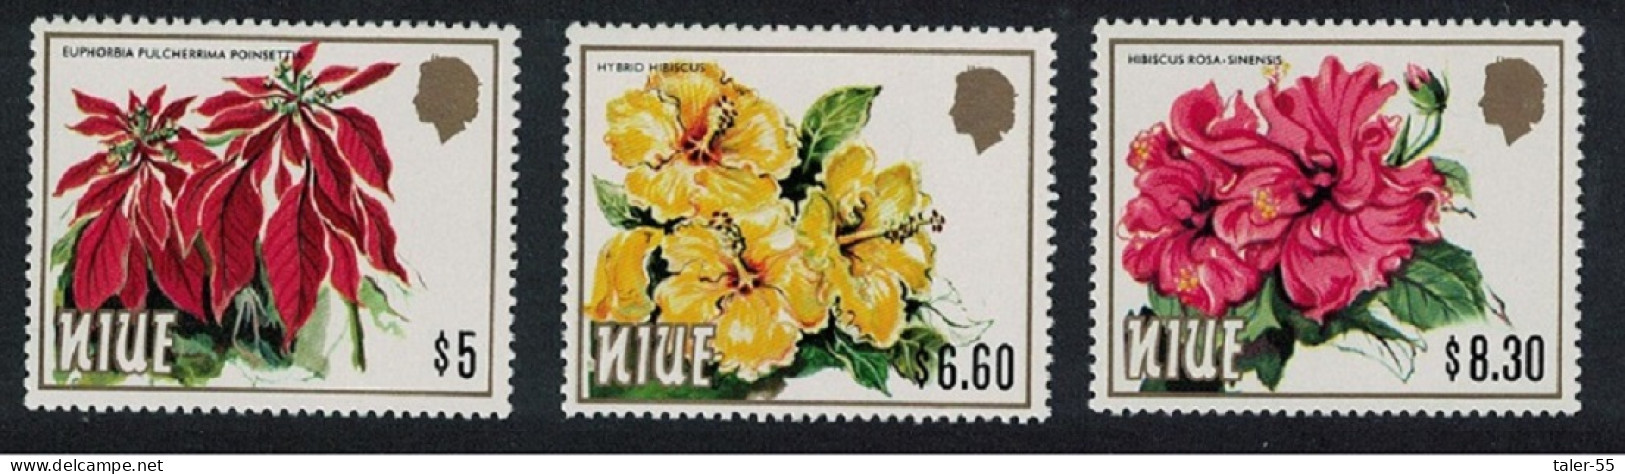 Niue Hibiscus Poinsettia Flowers 3 KEY VALUES 1984 MNH SG#540-542 - Niue